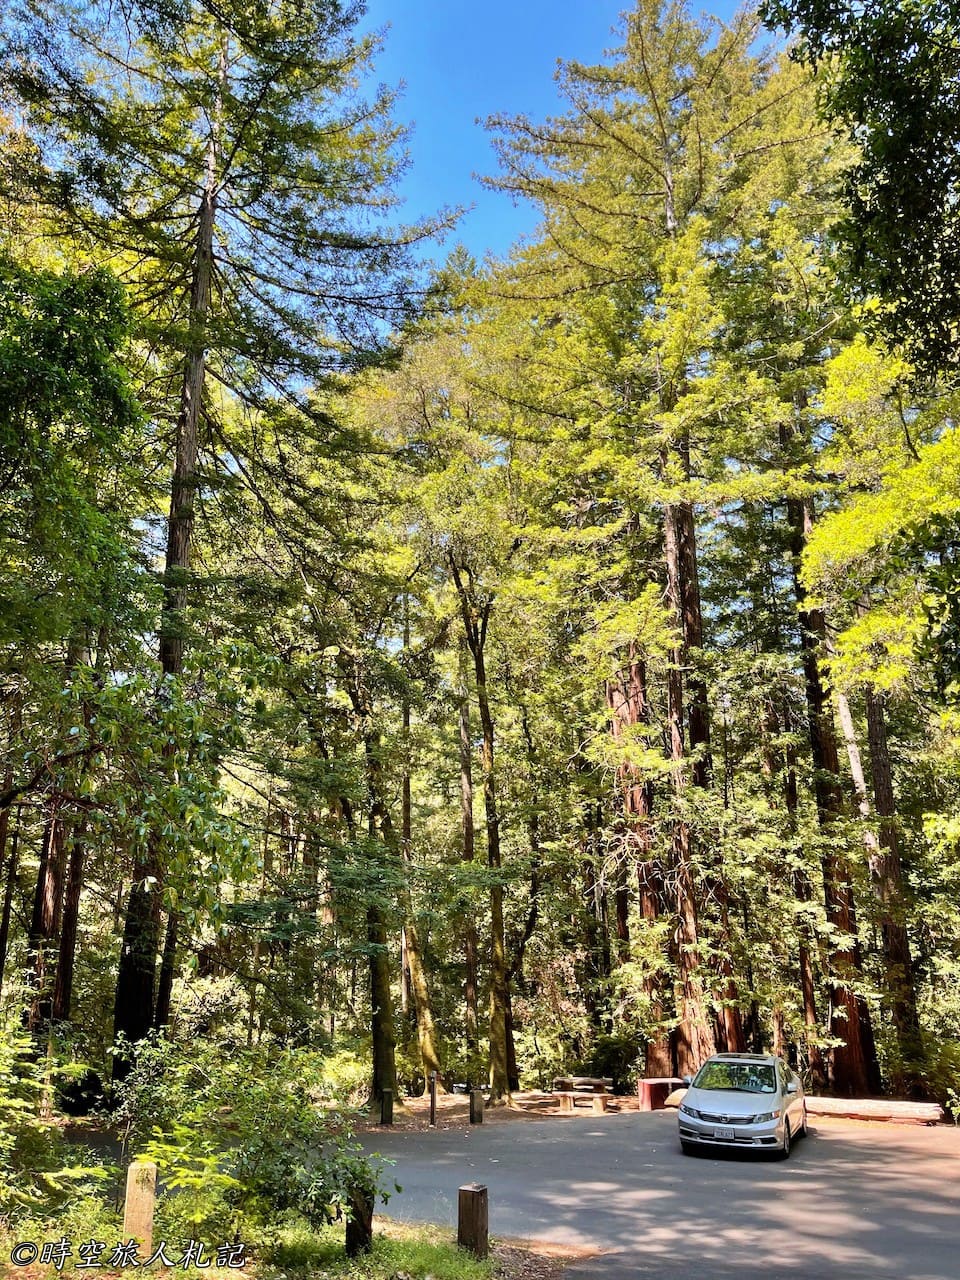 Portola redwood state park 12